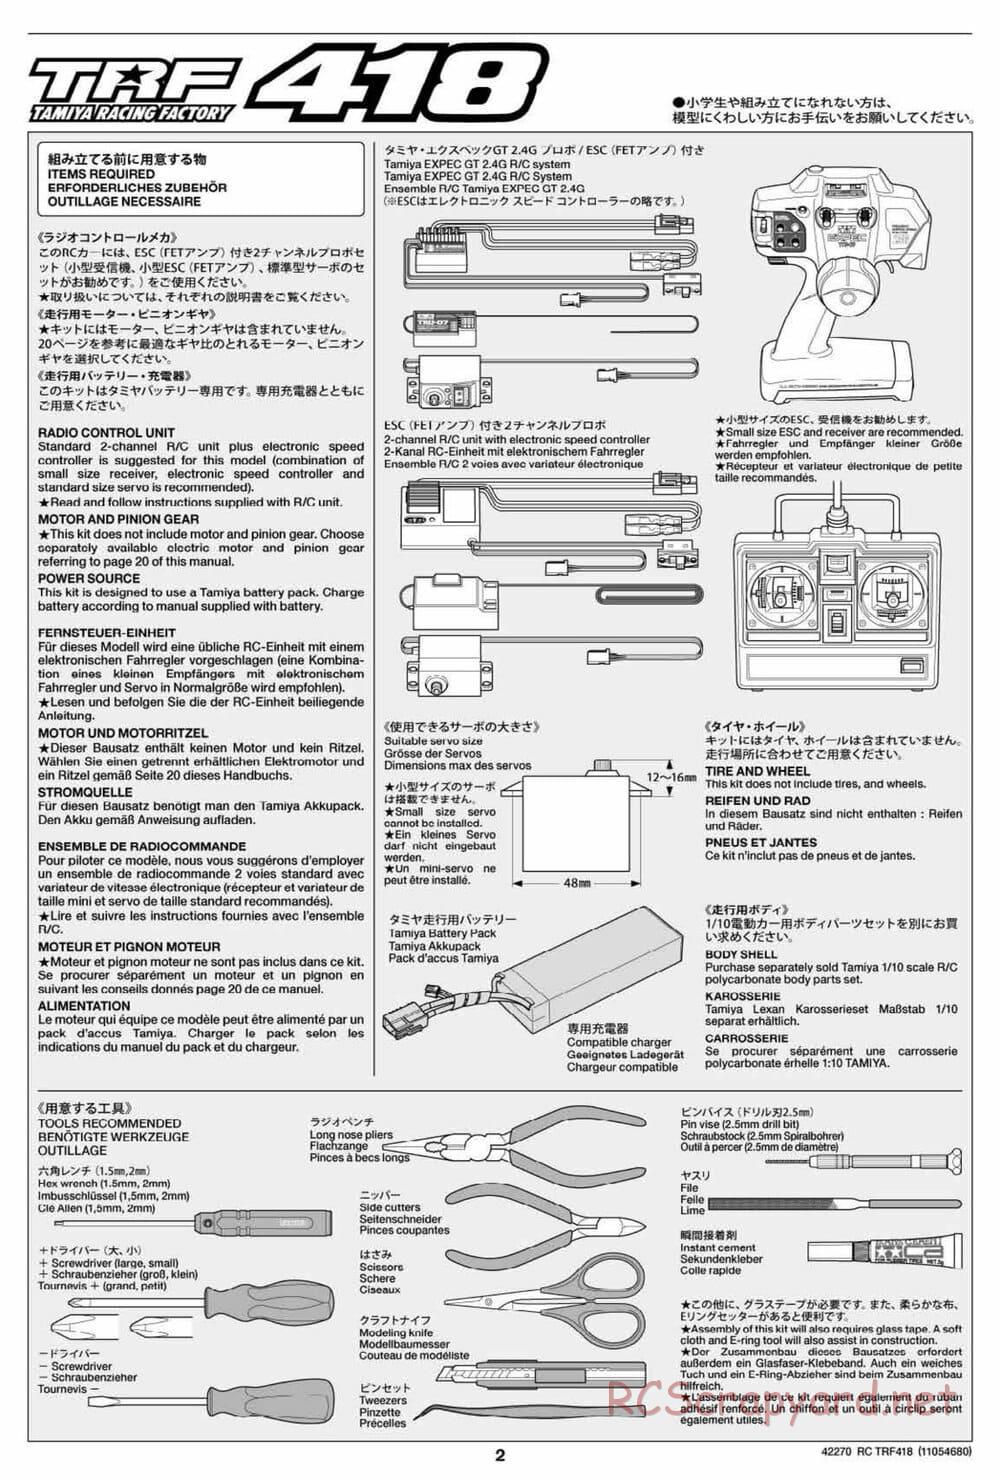 Tamiya - TRF418 Chassis - Manual - Page 2